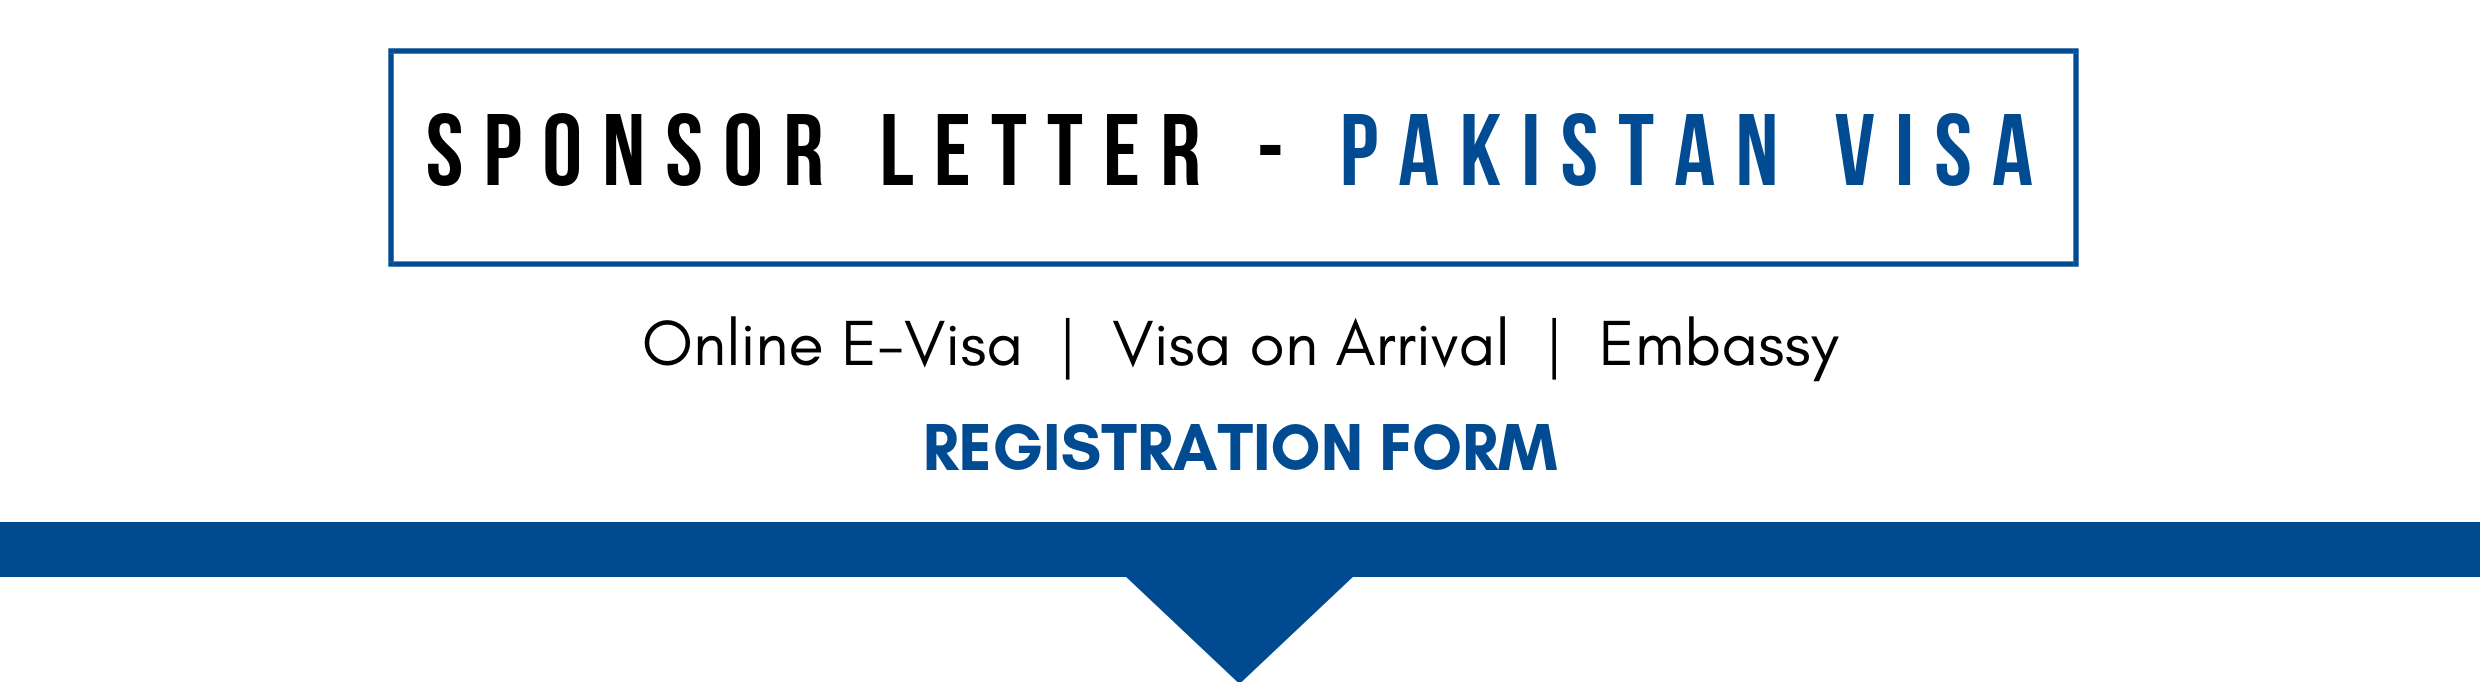 Sponsor Letter For Pakistan Visa 55 Euros Order Now Apricot Tours